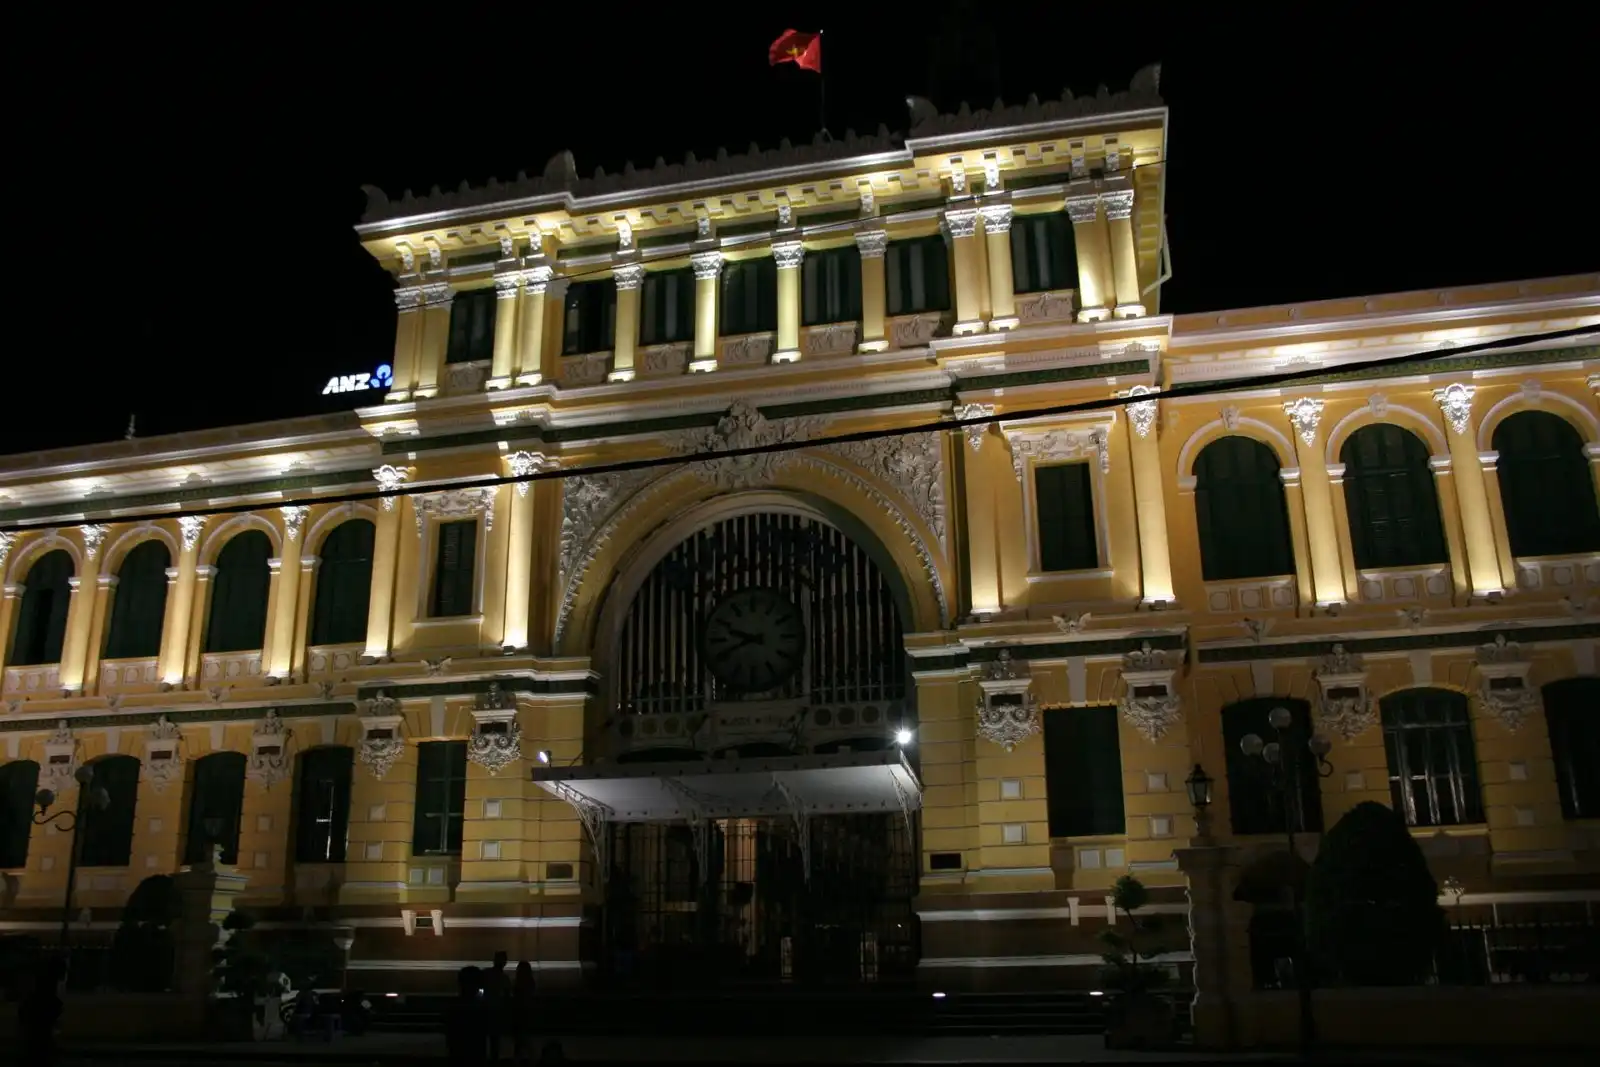 Saigon Main Post Office at night, Vietnam